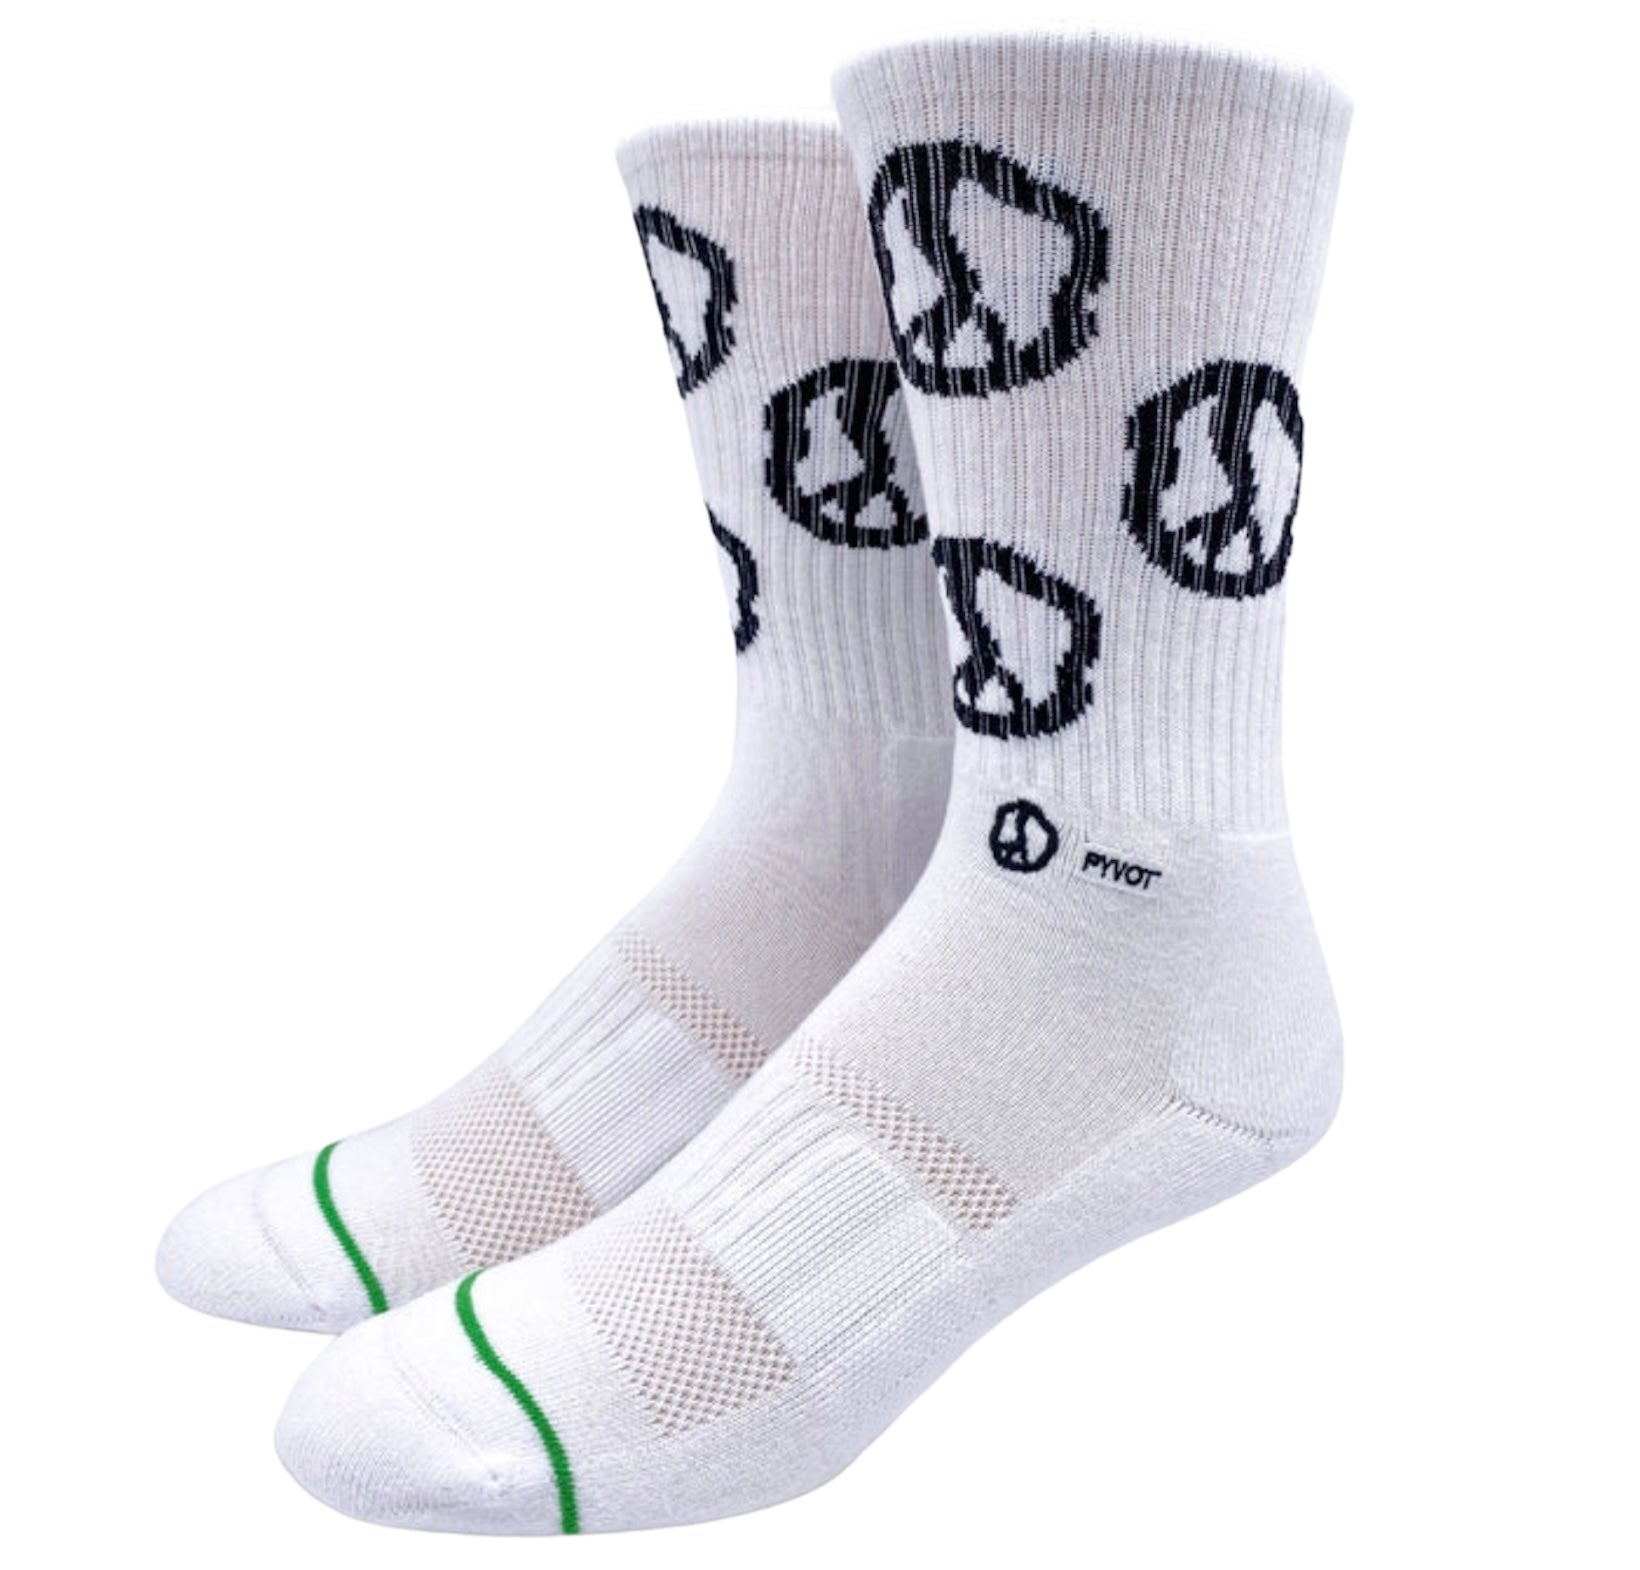 Pyvot Dizzy Peace Socks